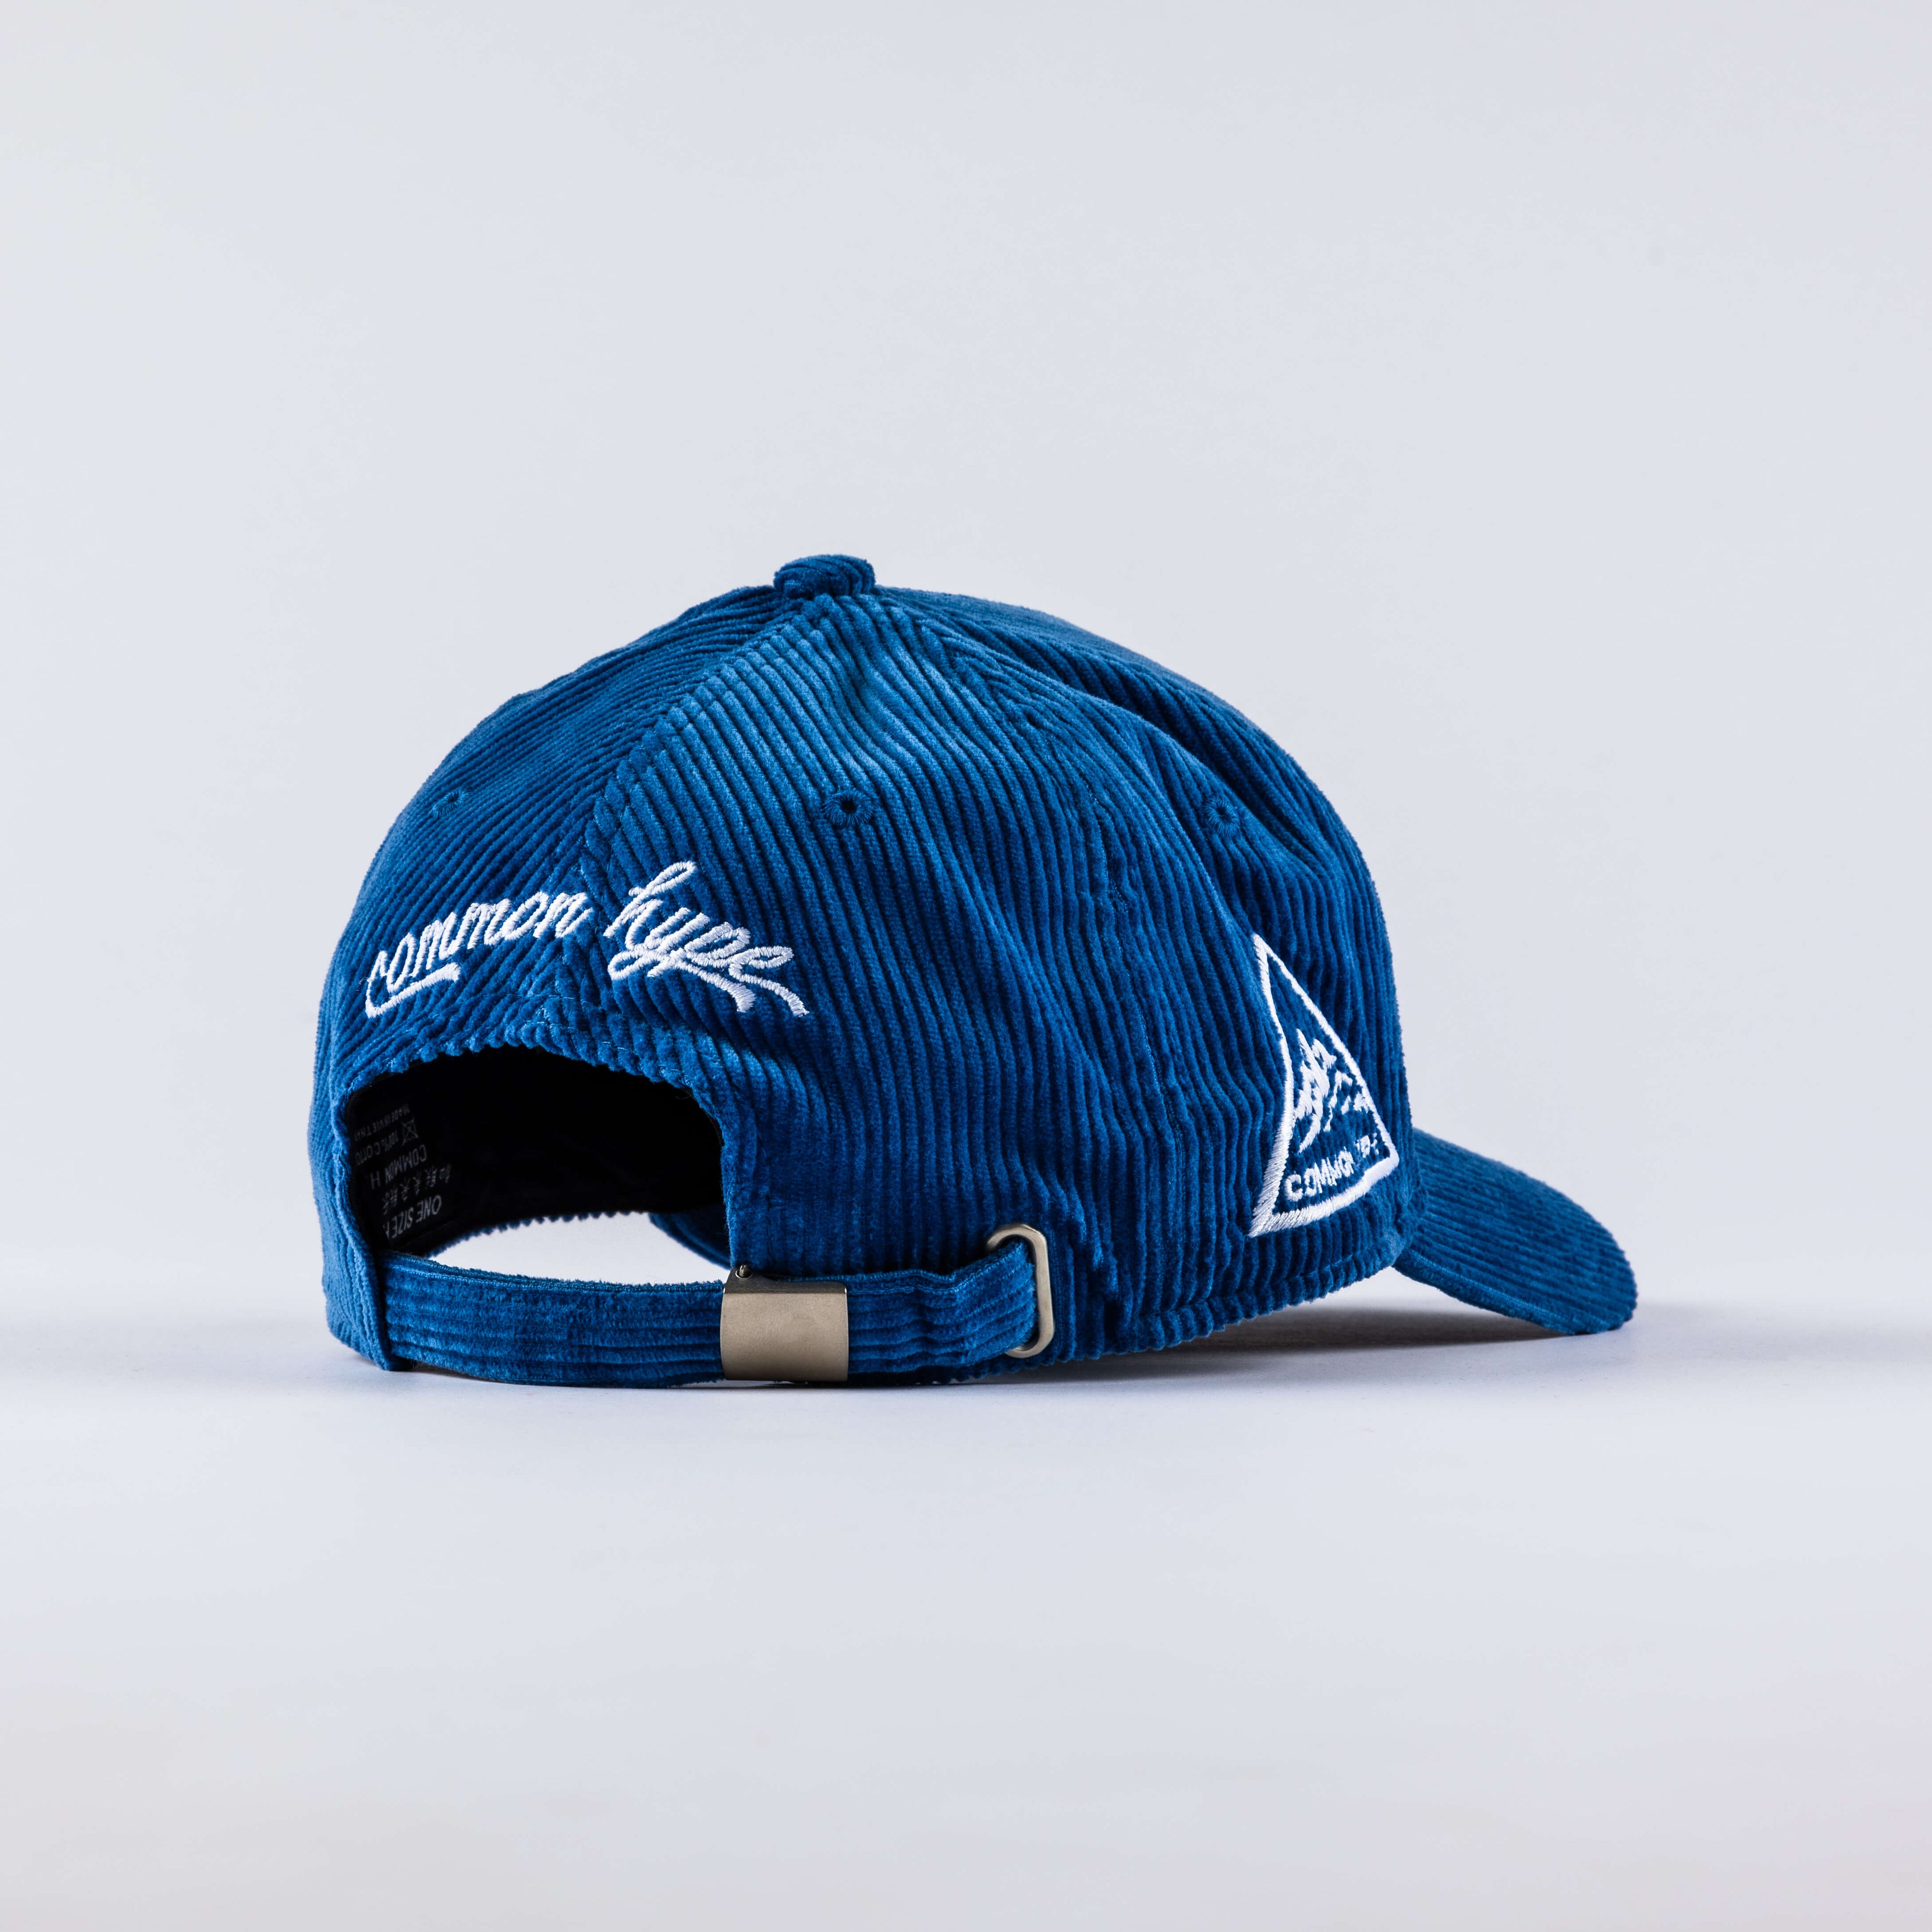 Common Hype Corduroy Blue Hat